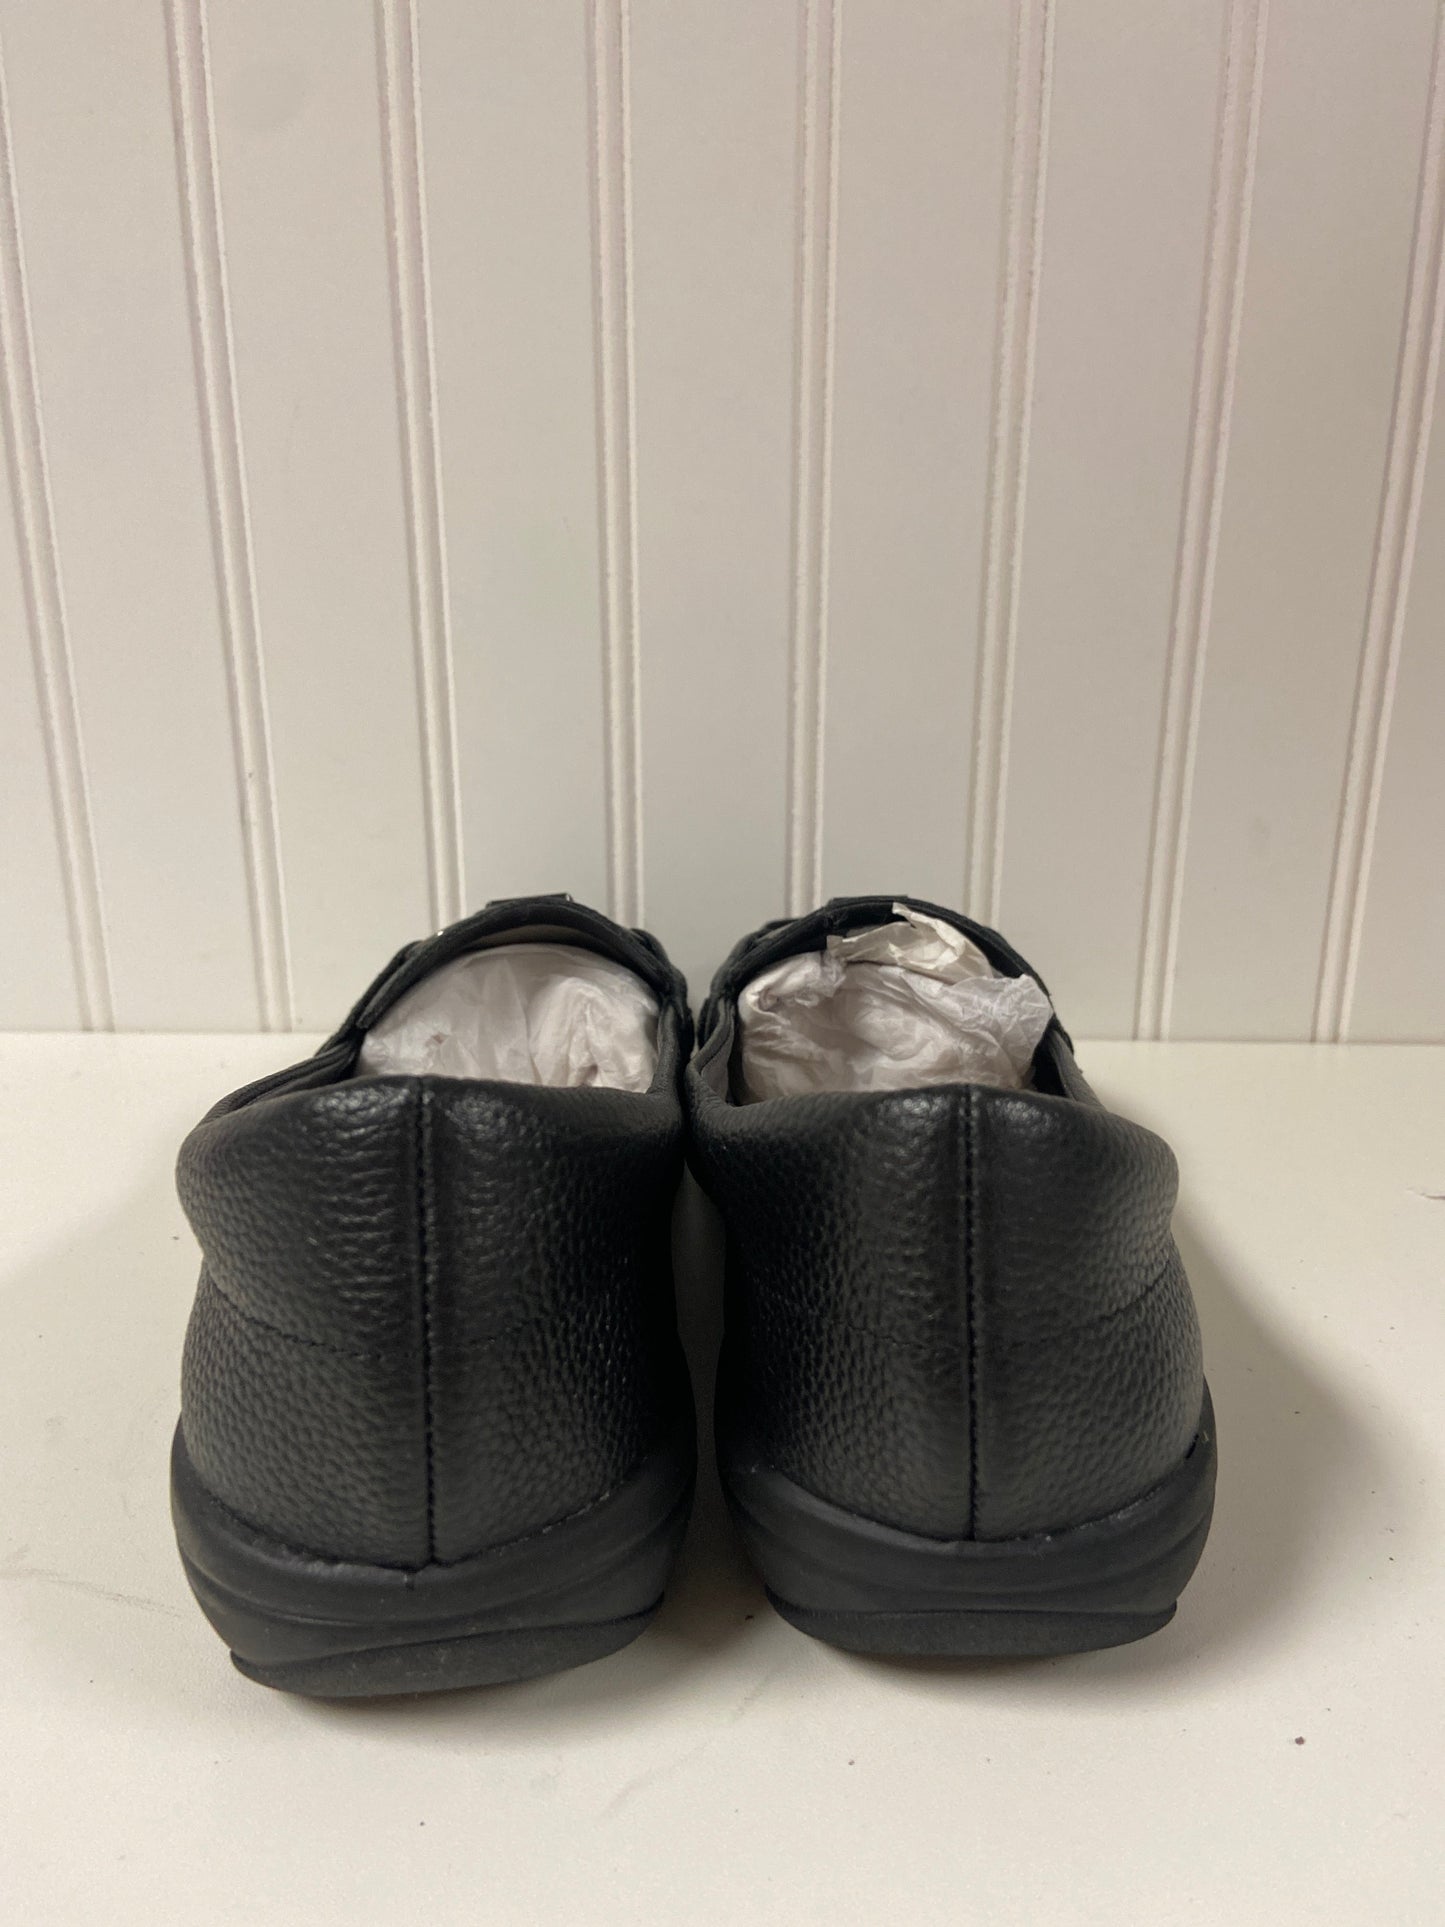 Black Shoes Flats Easy Spirit, Size 7.5